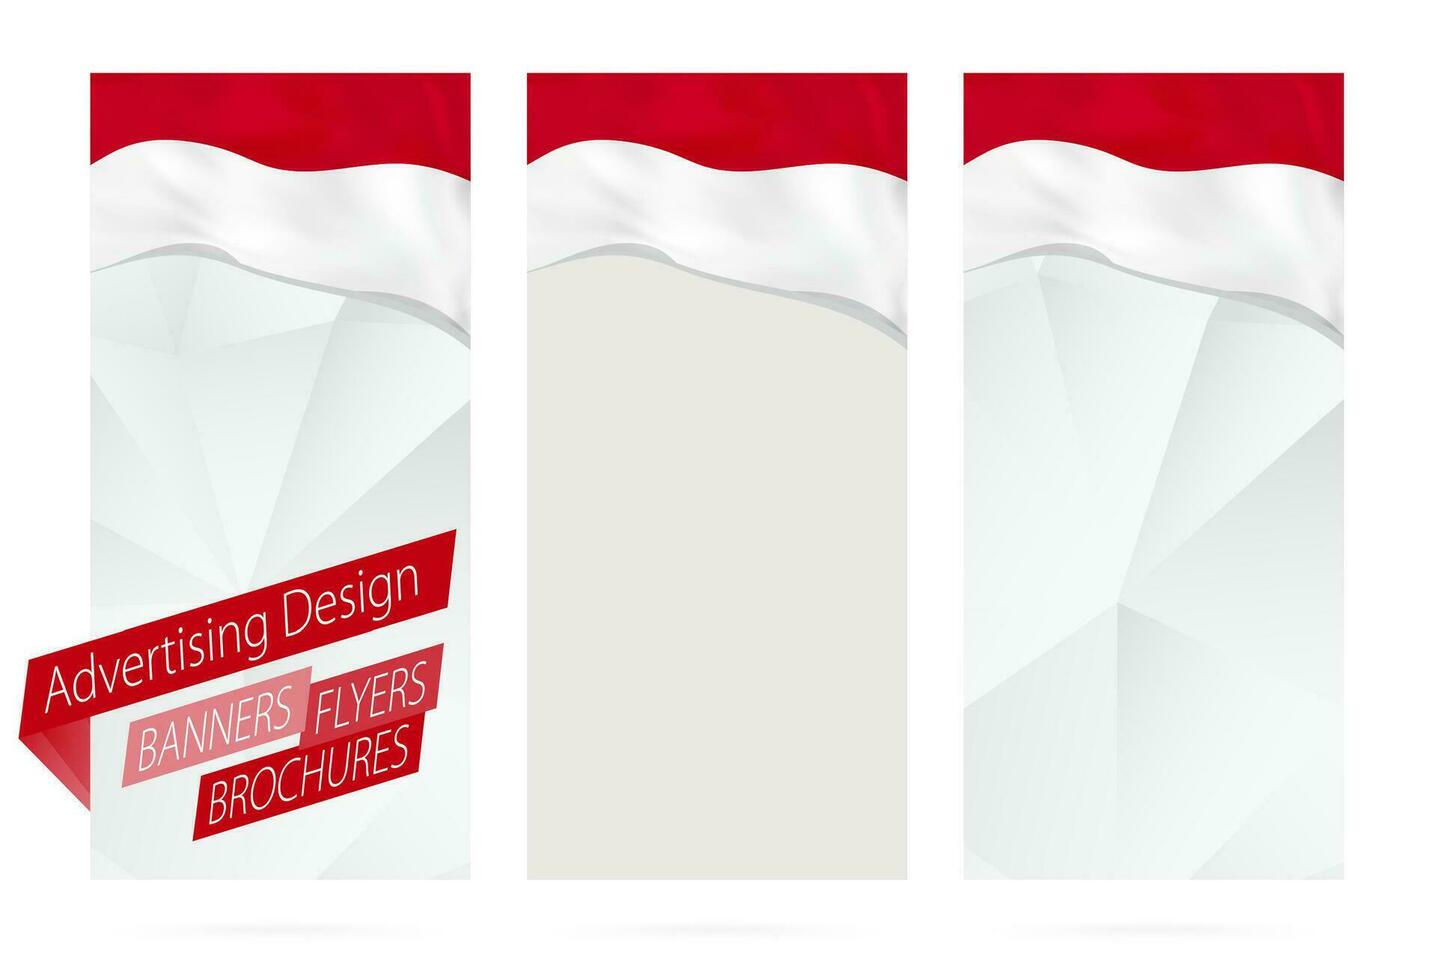 Design of banners, flyers, brochures with flag of Monaco. vector